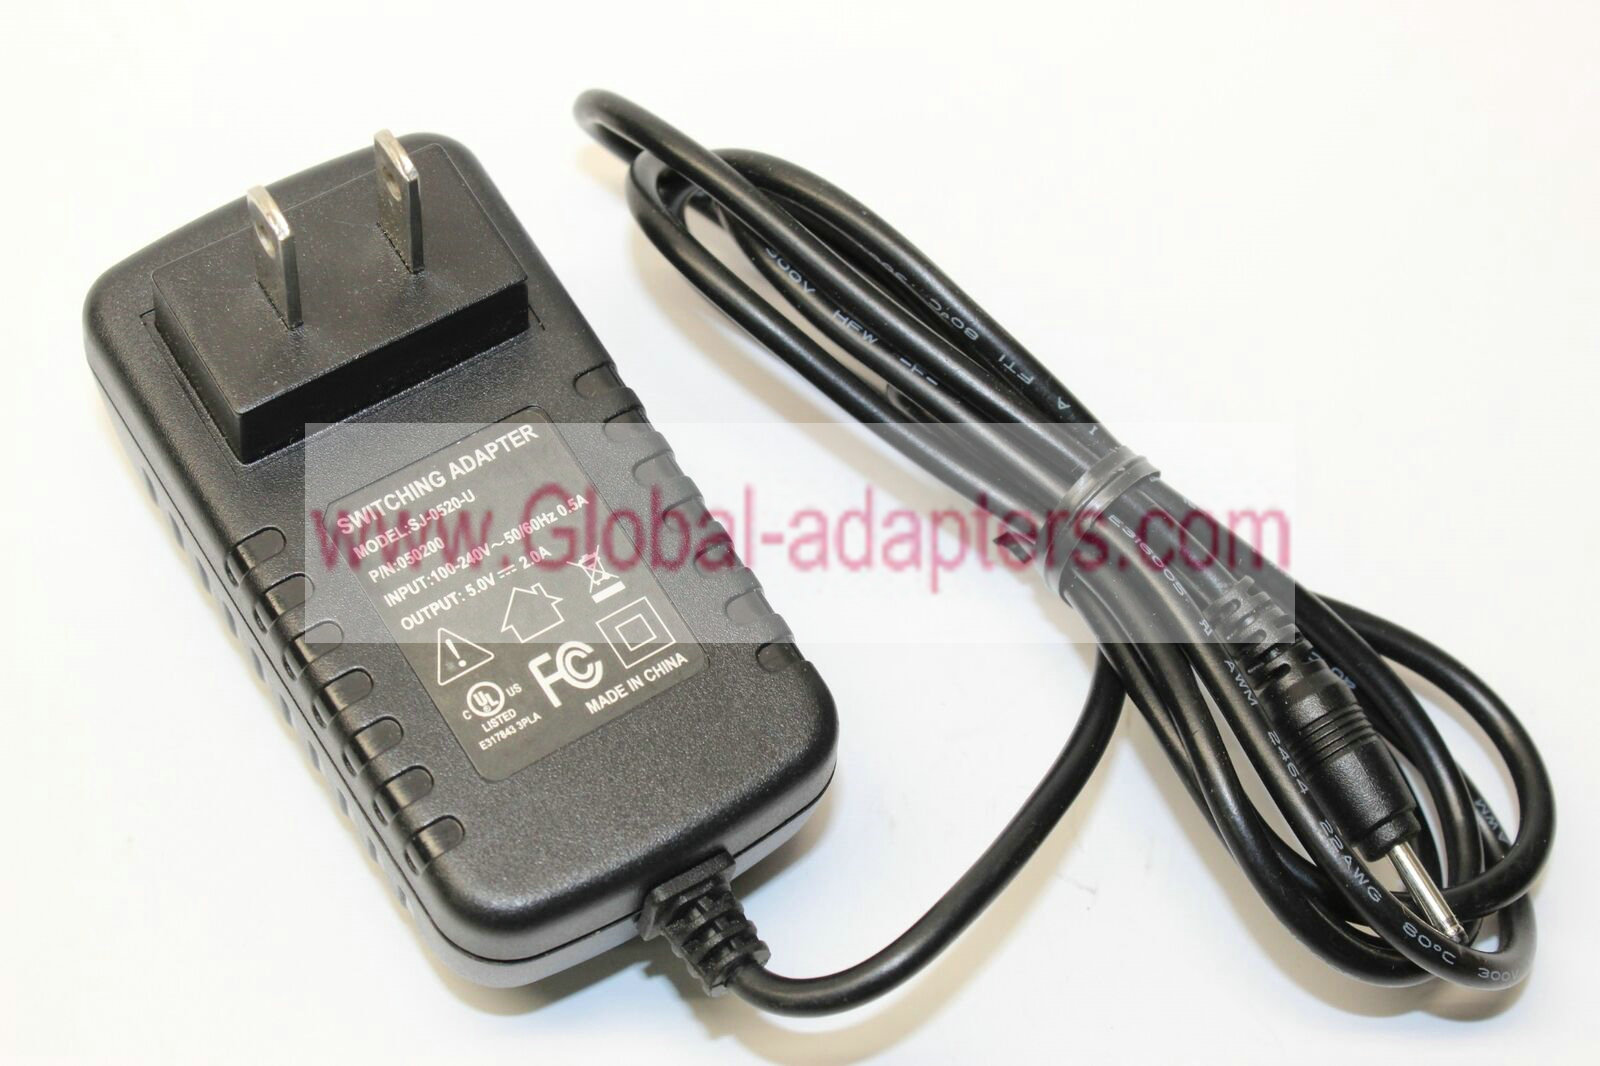 NEW Switching AC Adapter SJ-0520-U 050200 5.0V DC 2.0A Power Supply Transformer